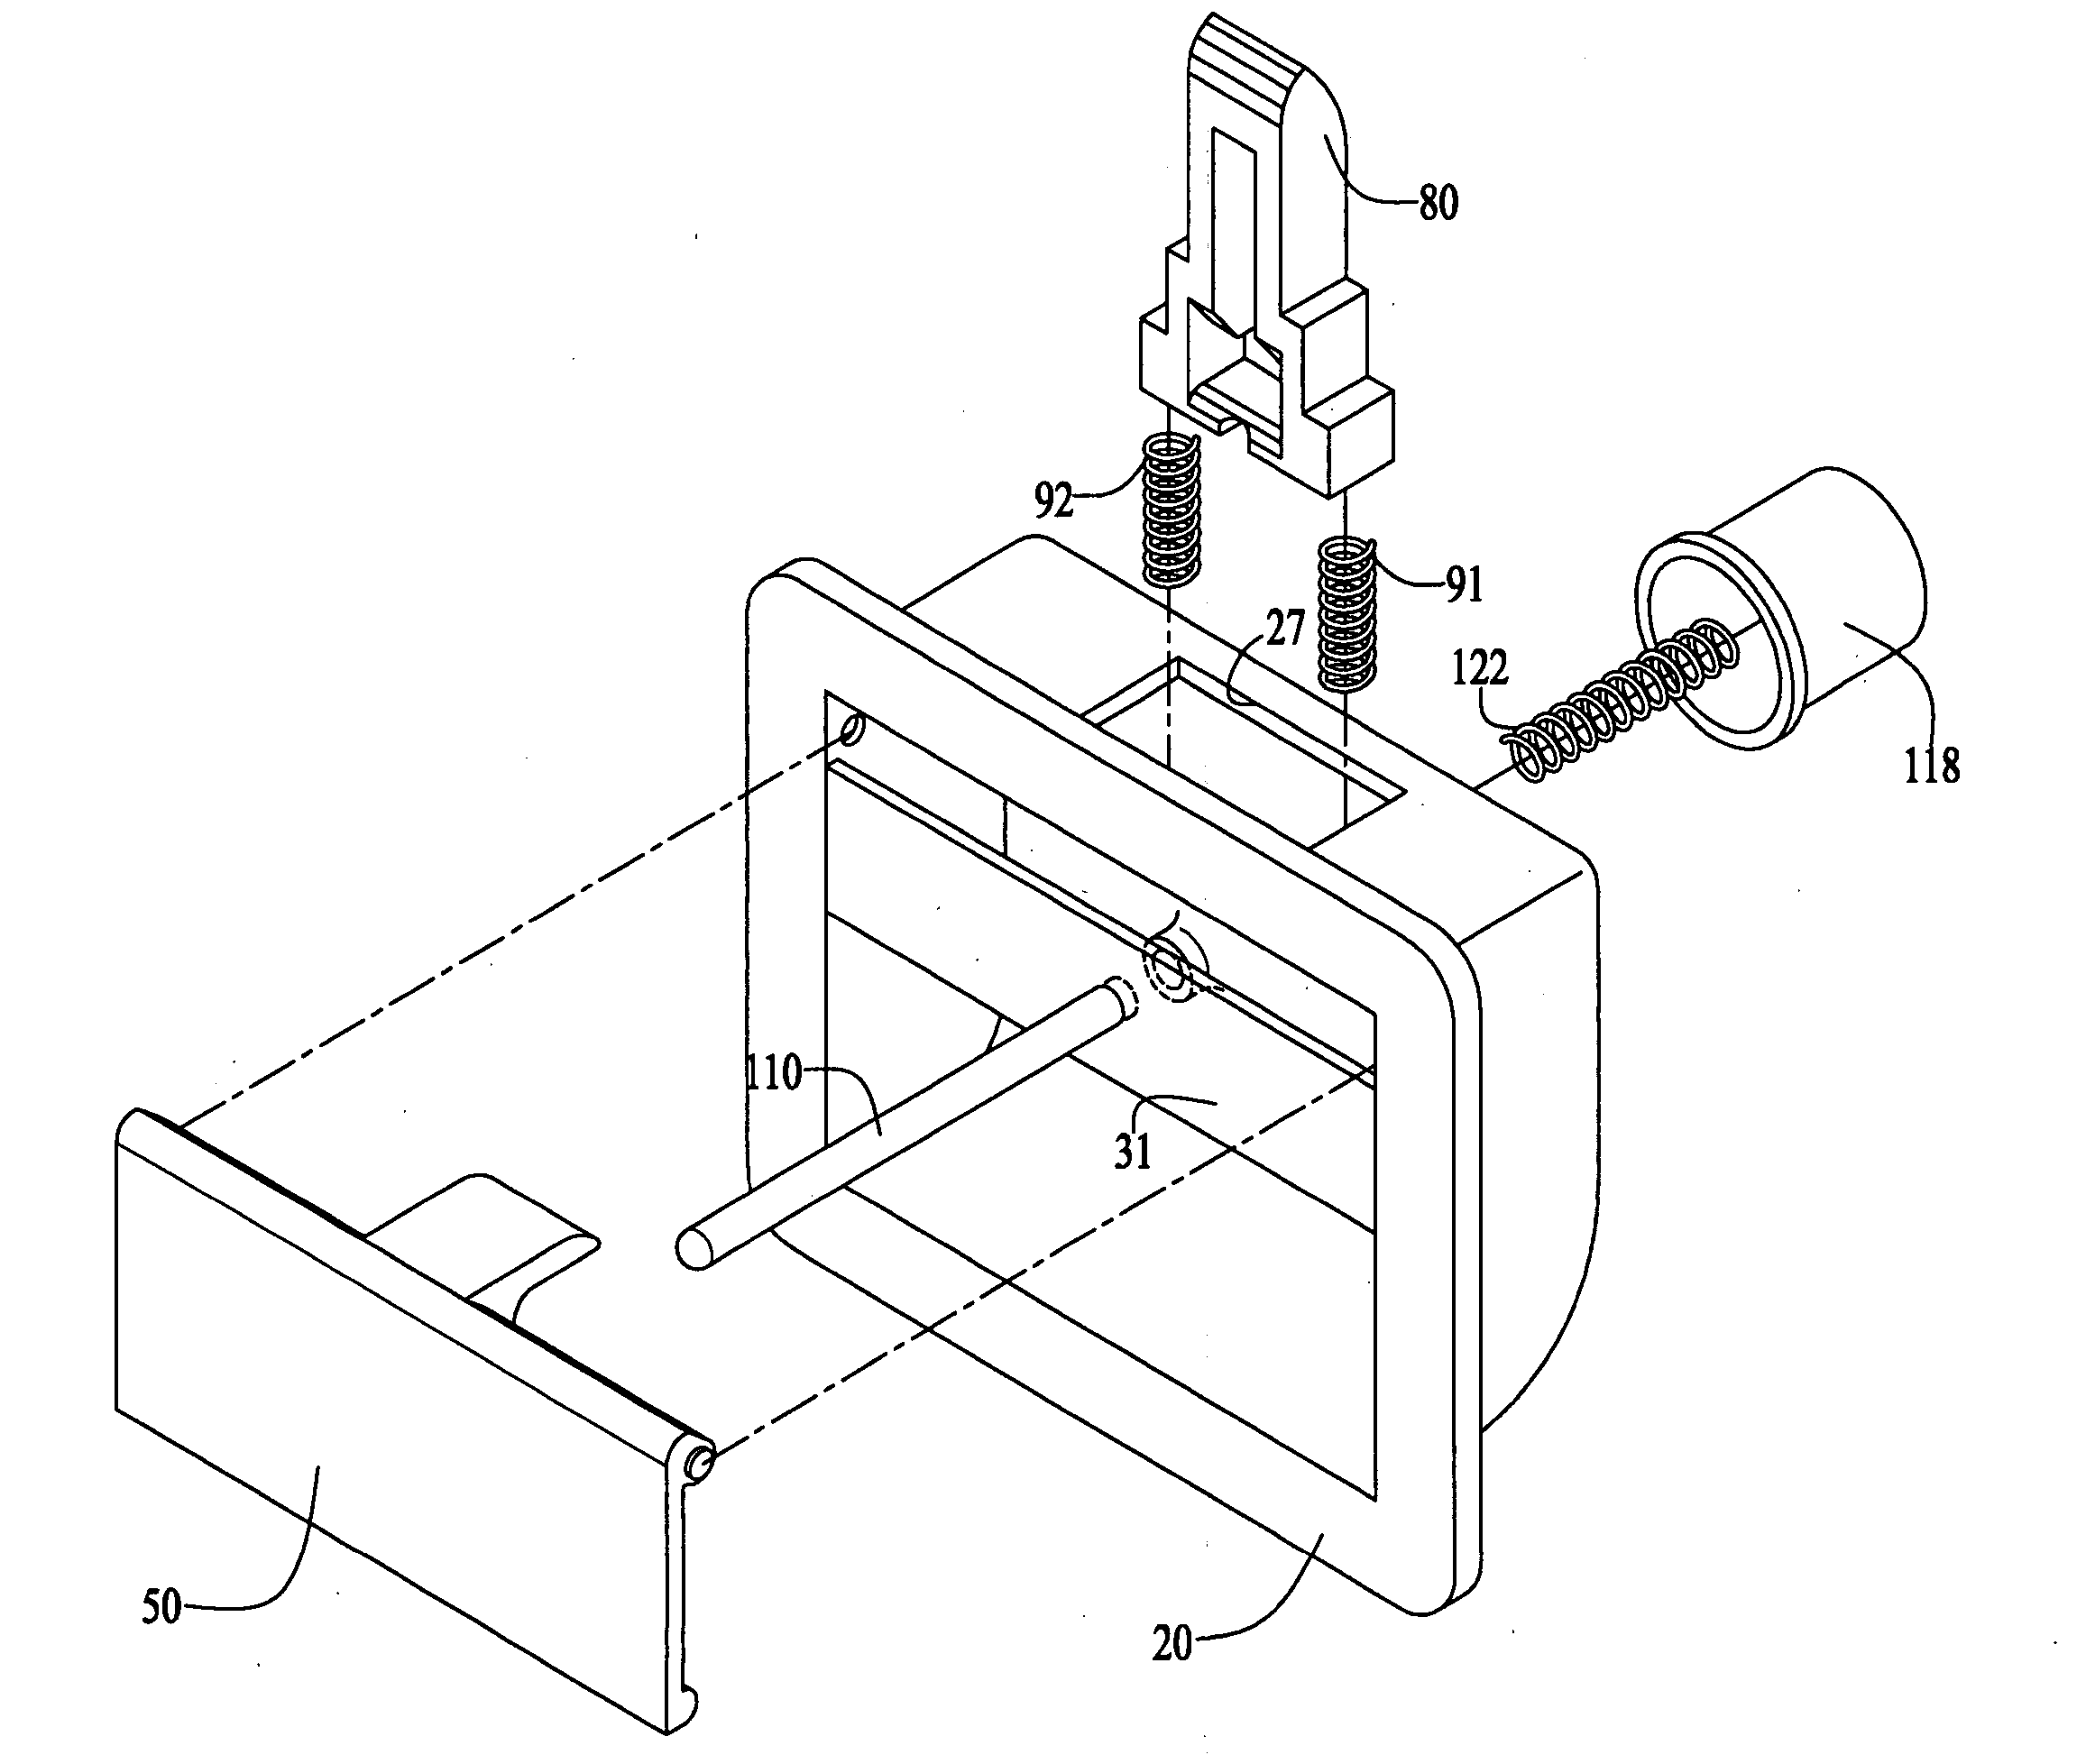 Flush handle latch mechanism